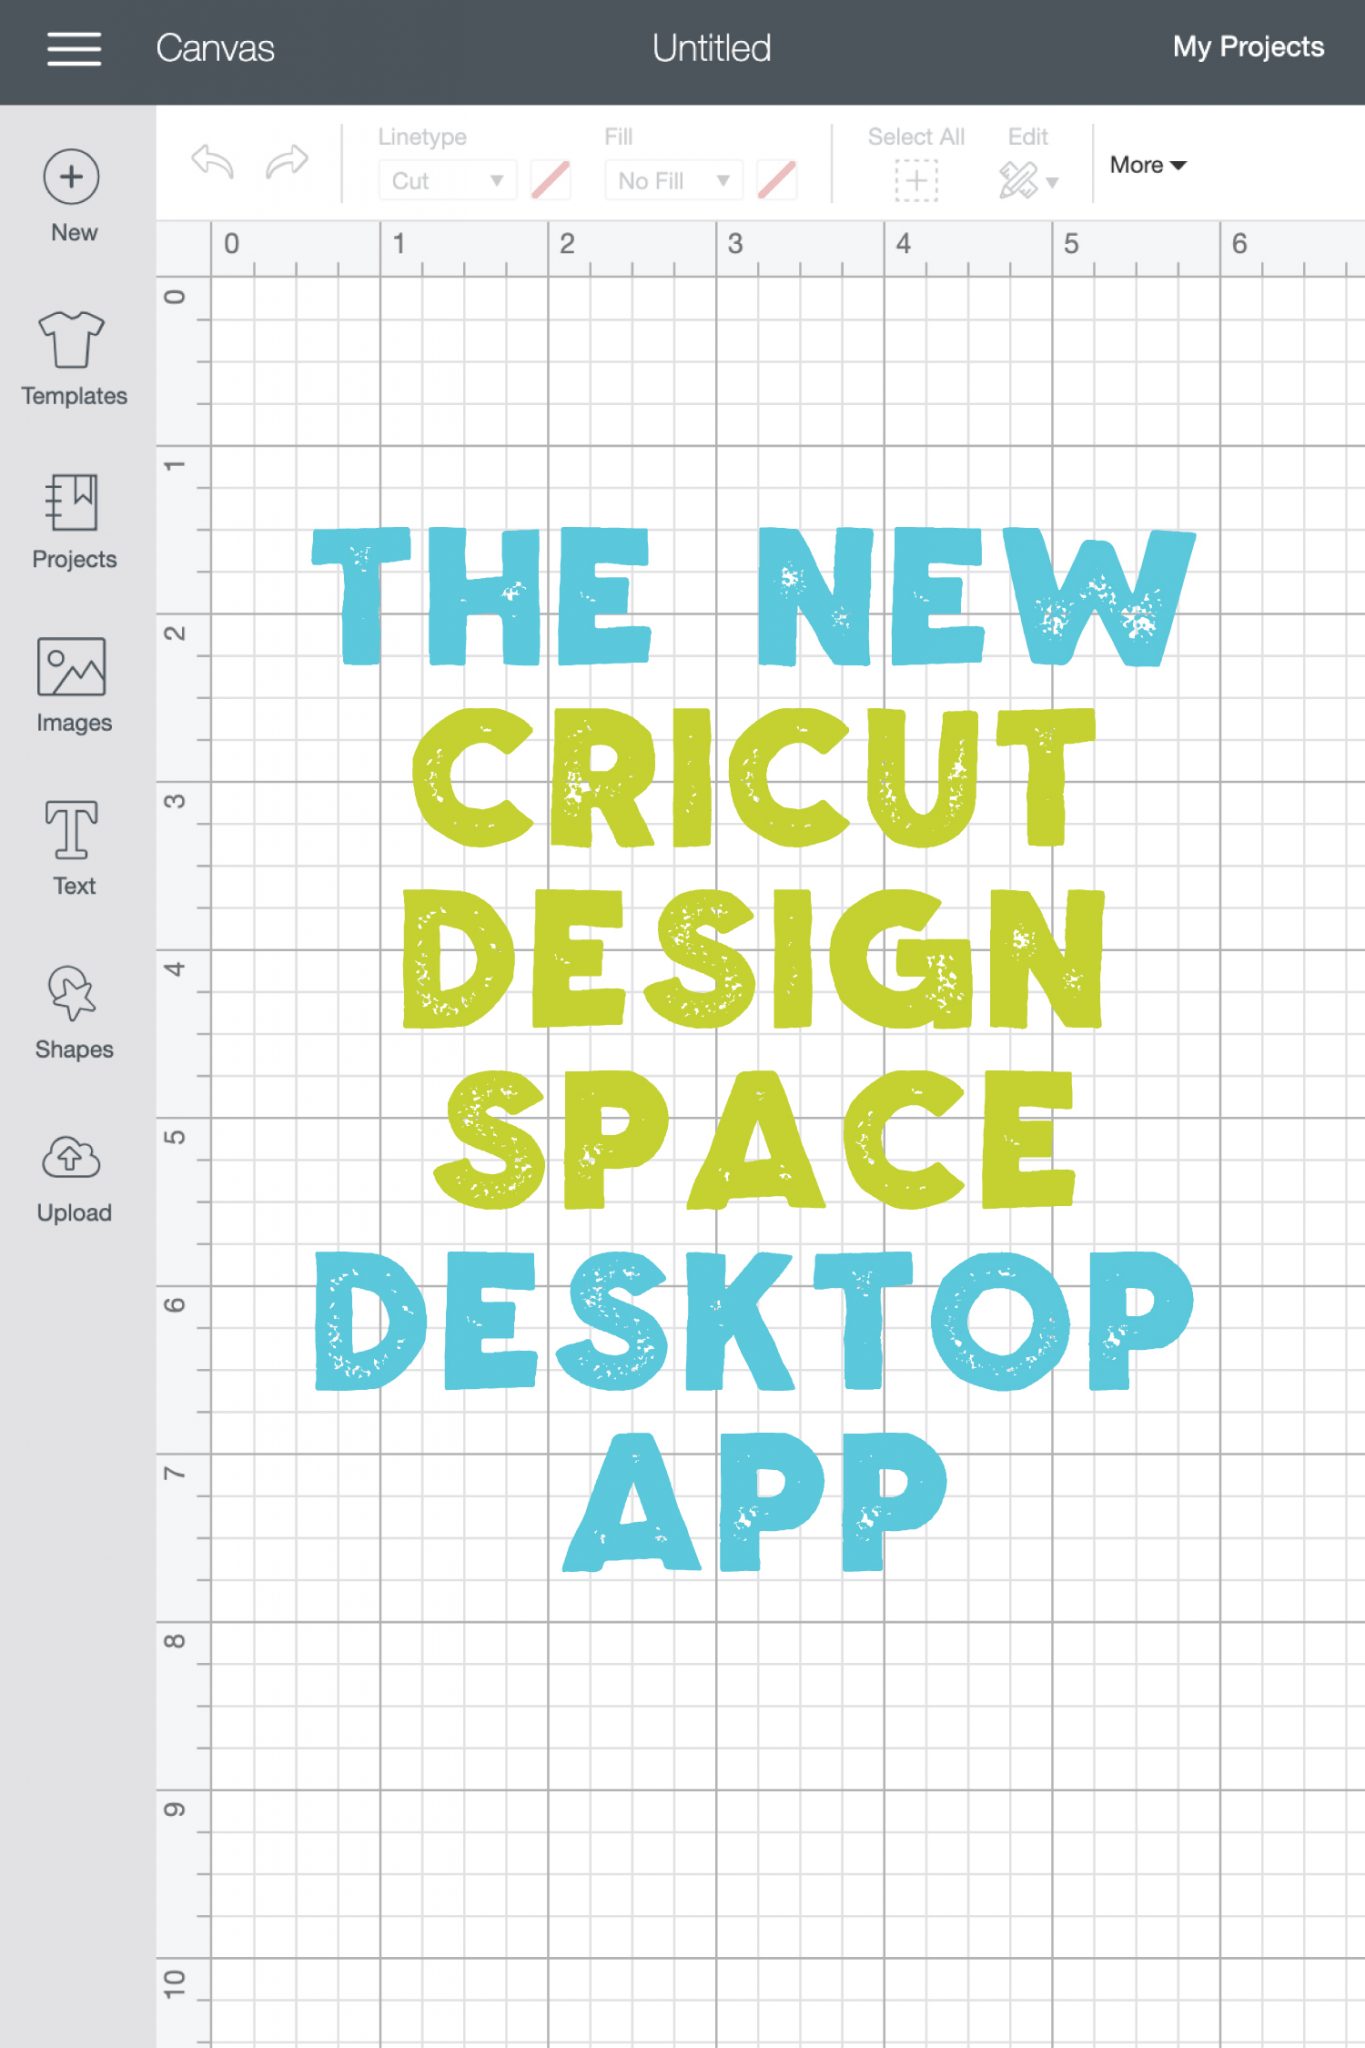 cricut-design-space-archives-hey-let-s-make-stuff